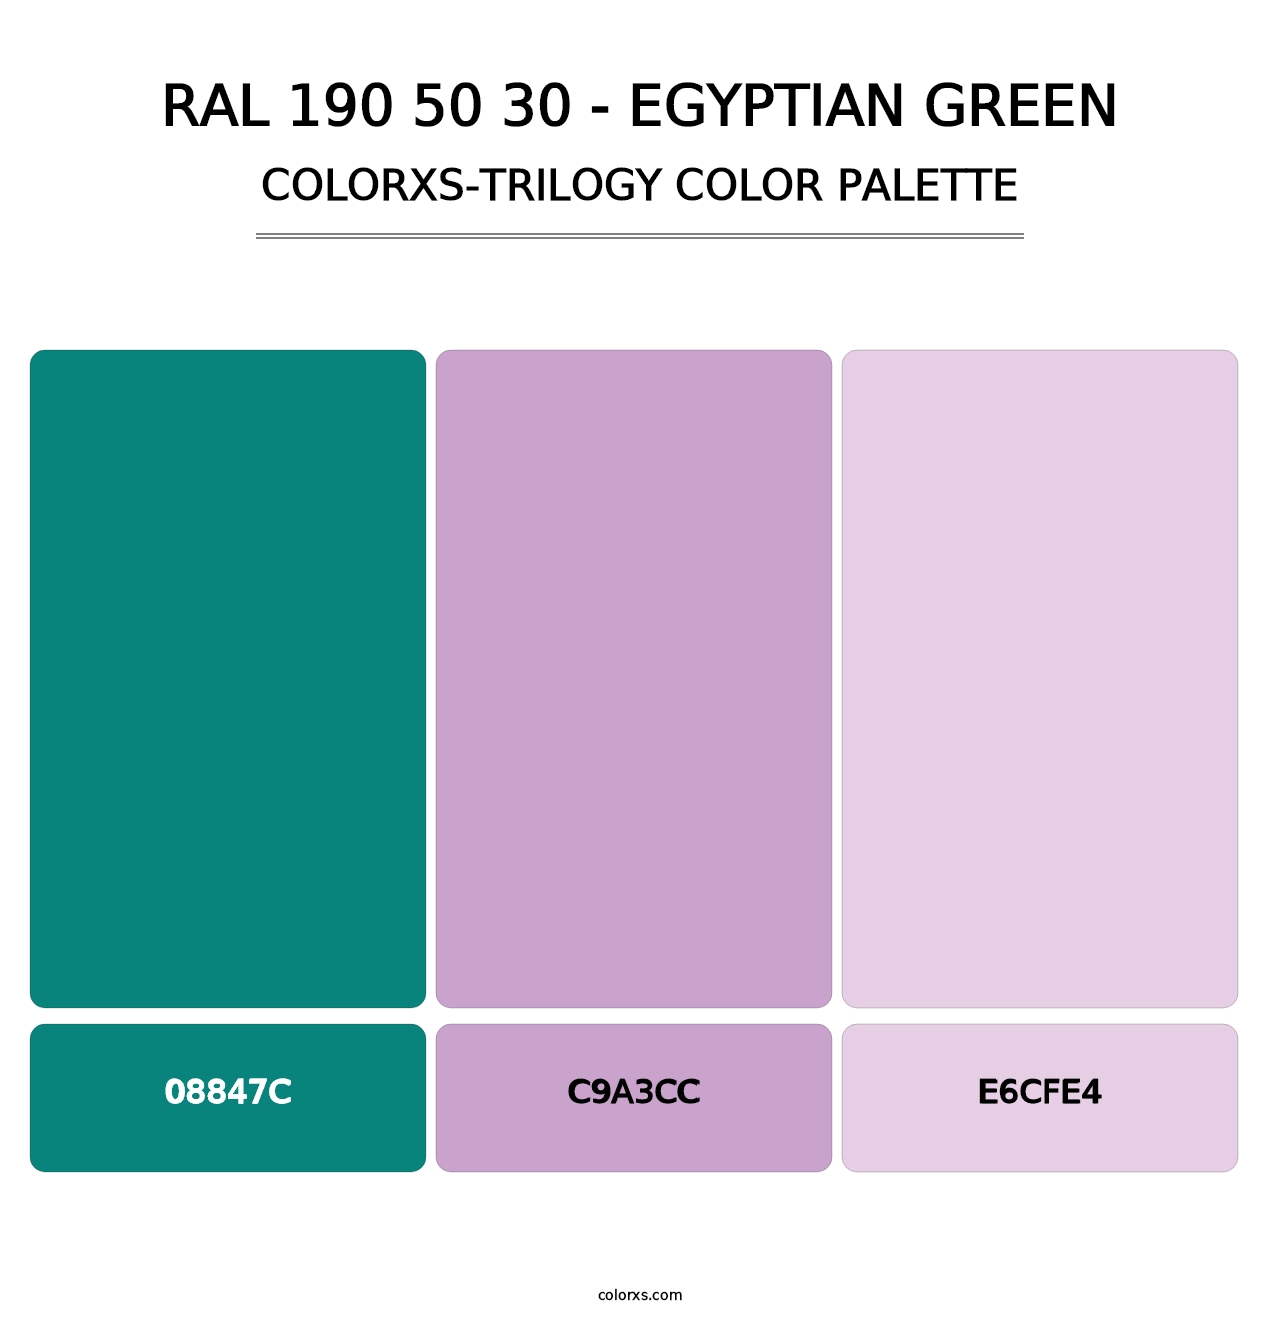 RAL 190 50 30 - Egyptian Green - Colorxs Trilogy Palette